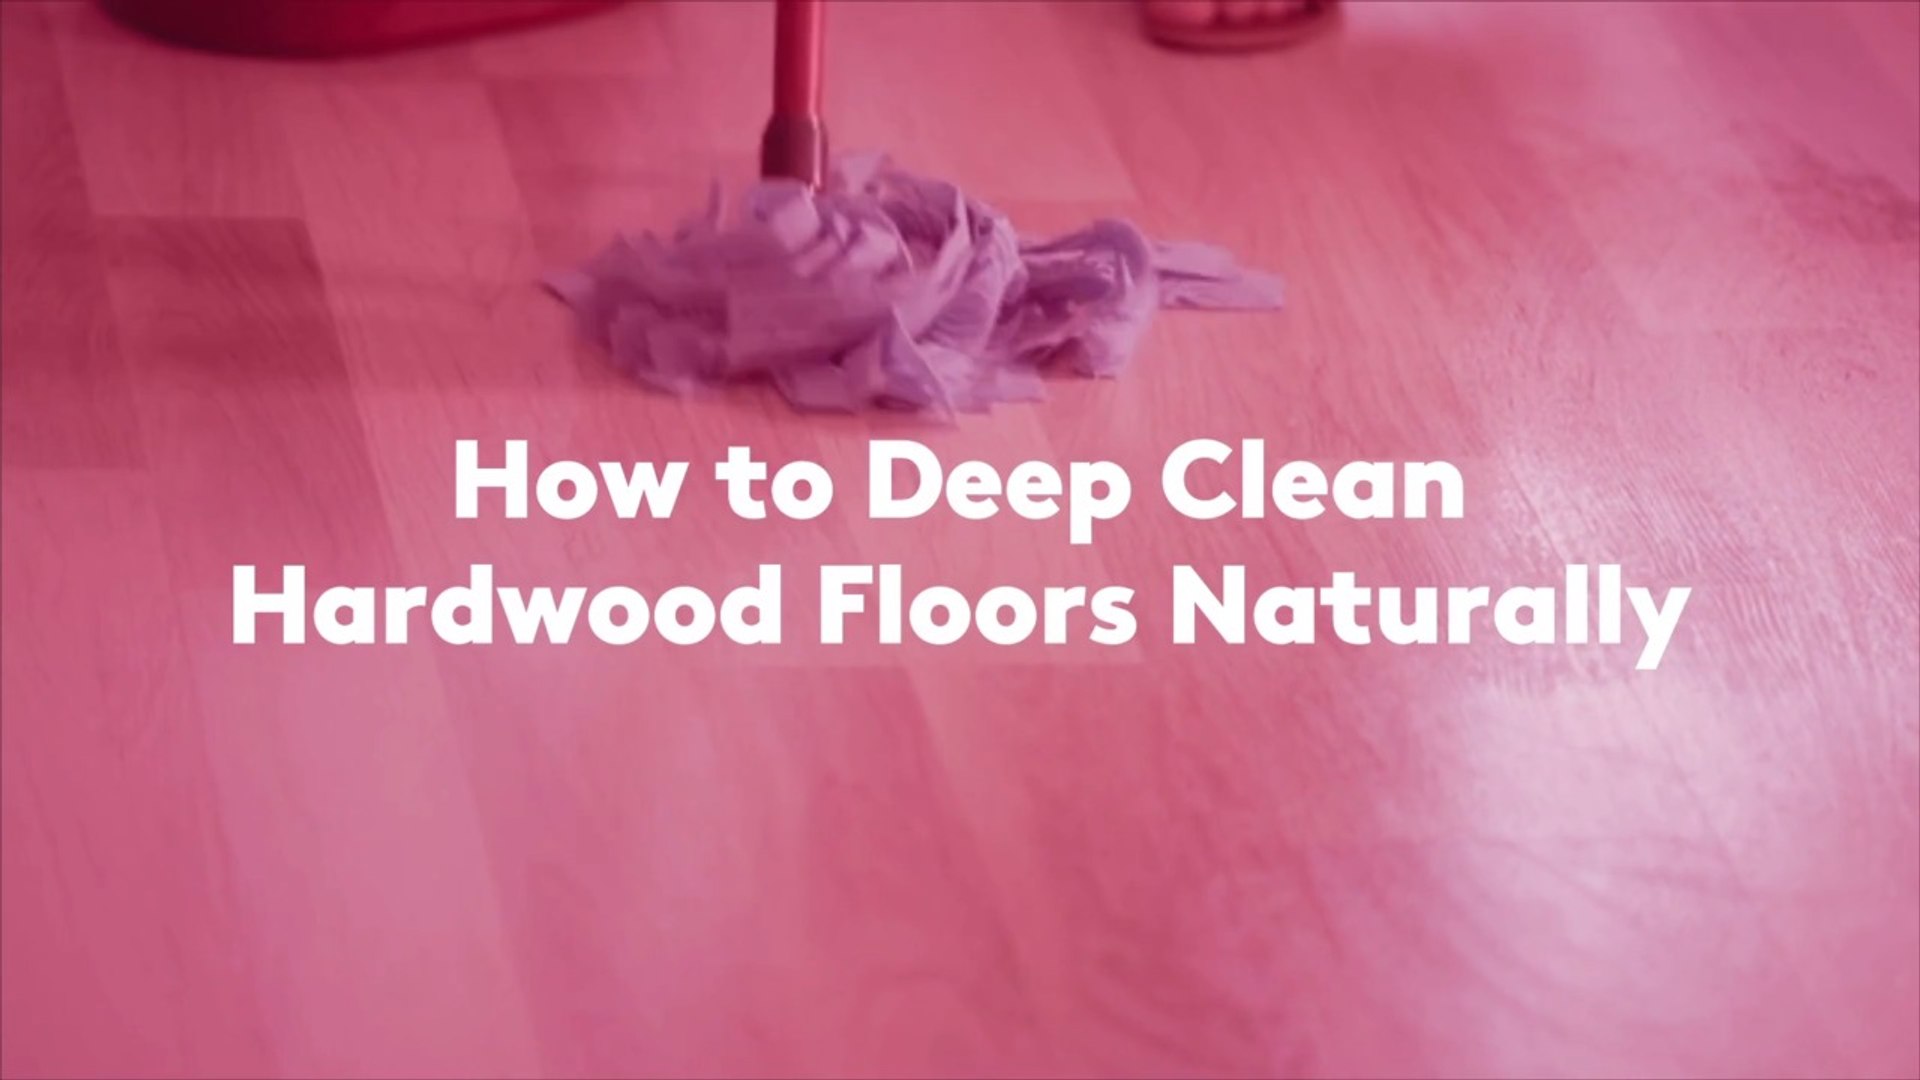 How to Deep Clean Hardwood Floors Naturally